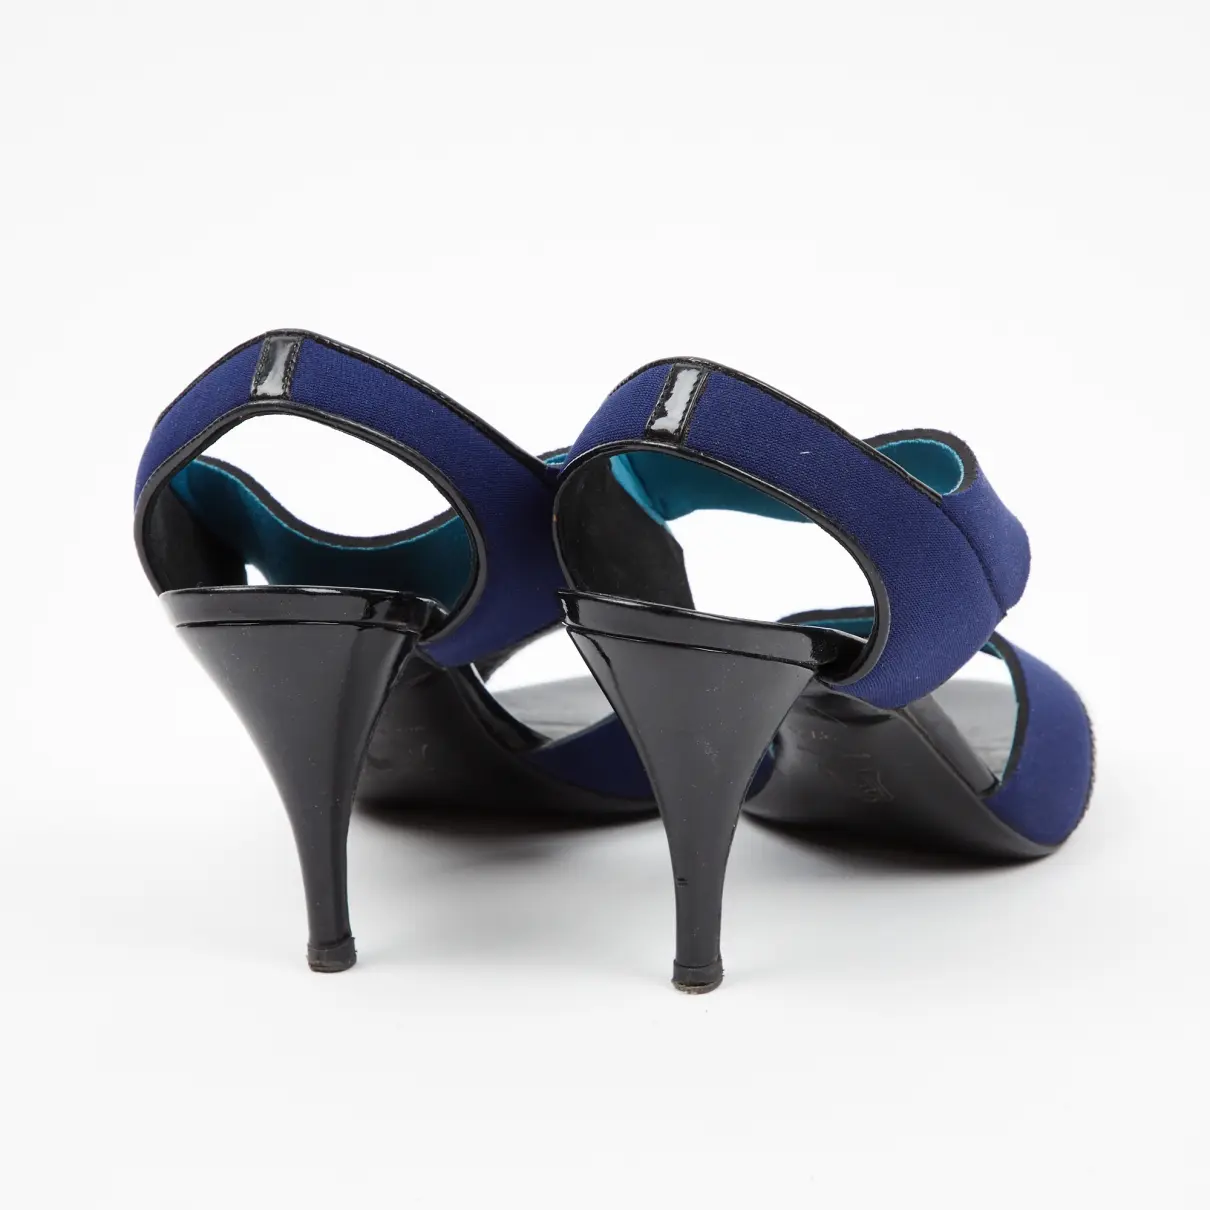 Buy Pierre Hardy Cloth sandal online